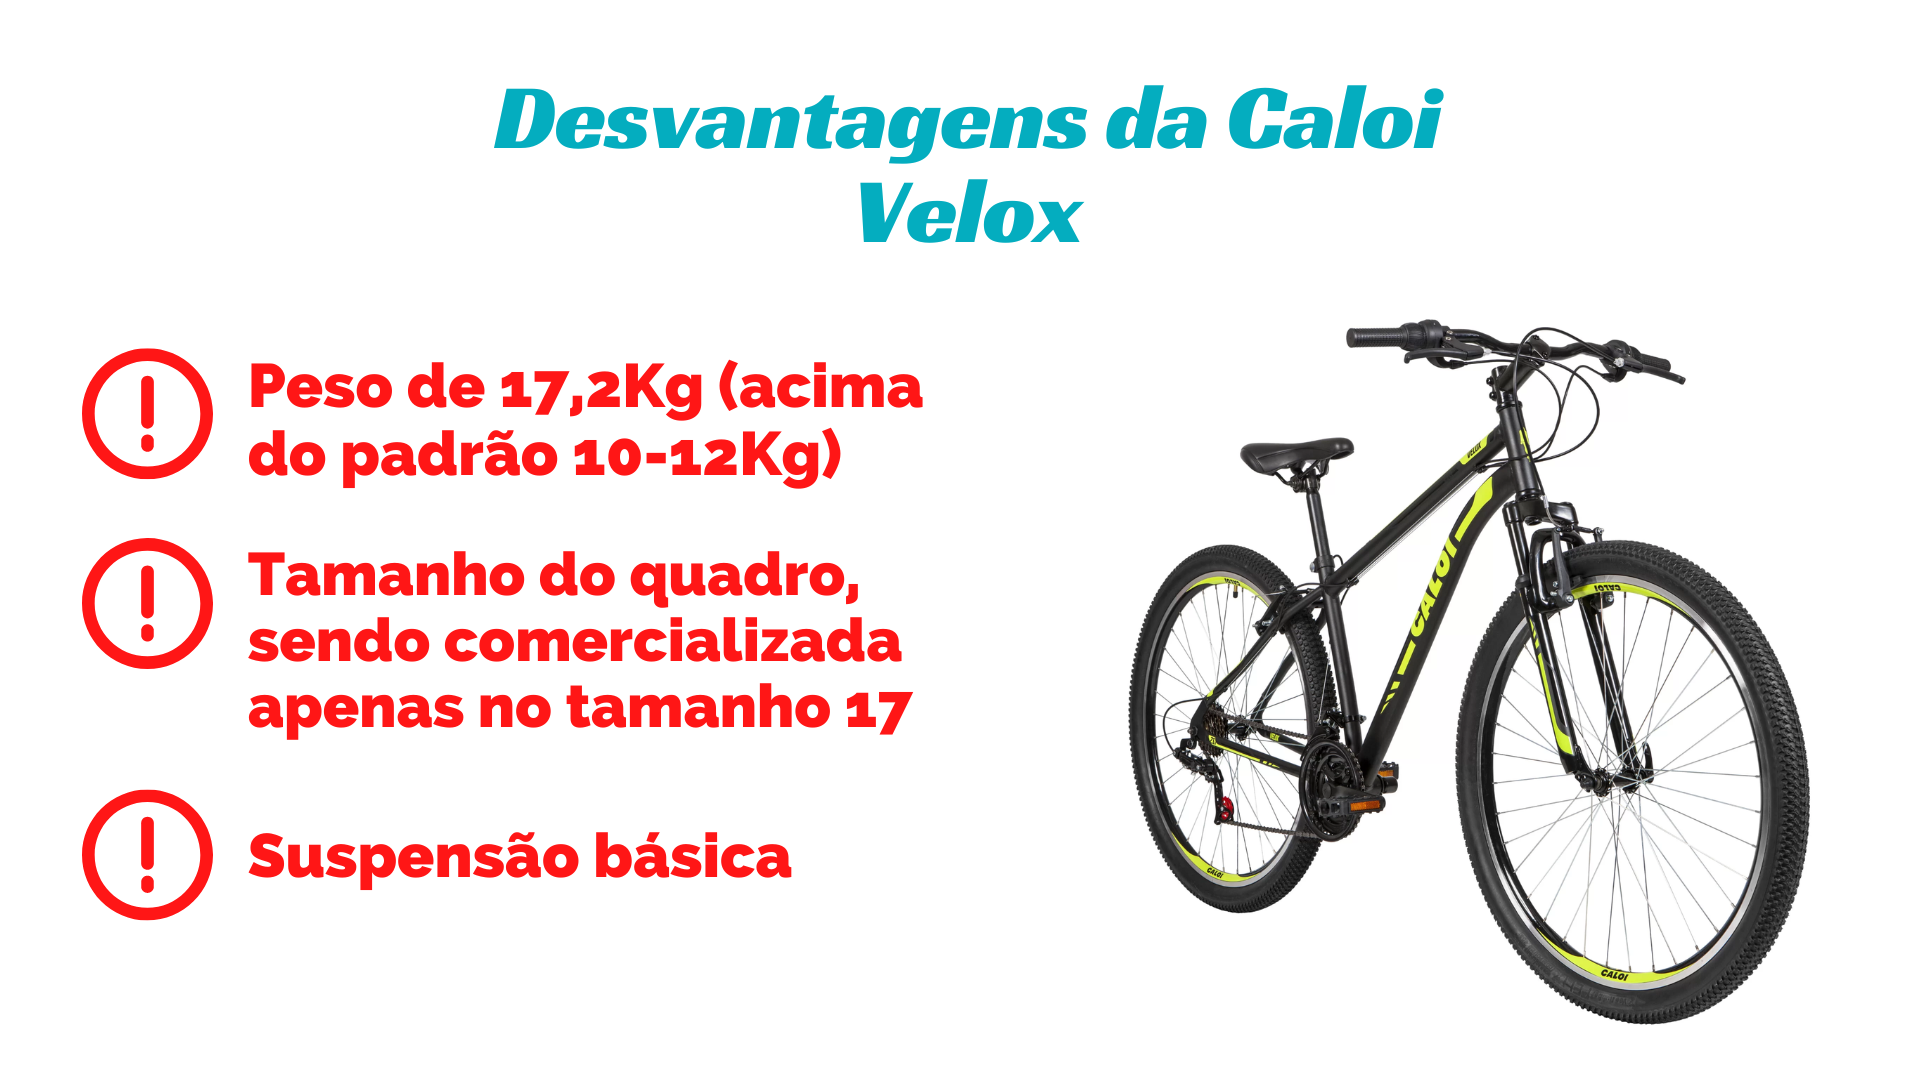 Desvantagens da Caloi Velox.